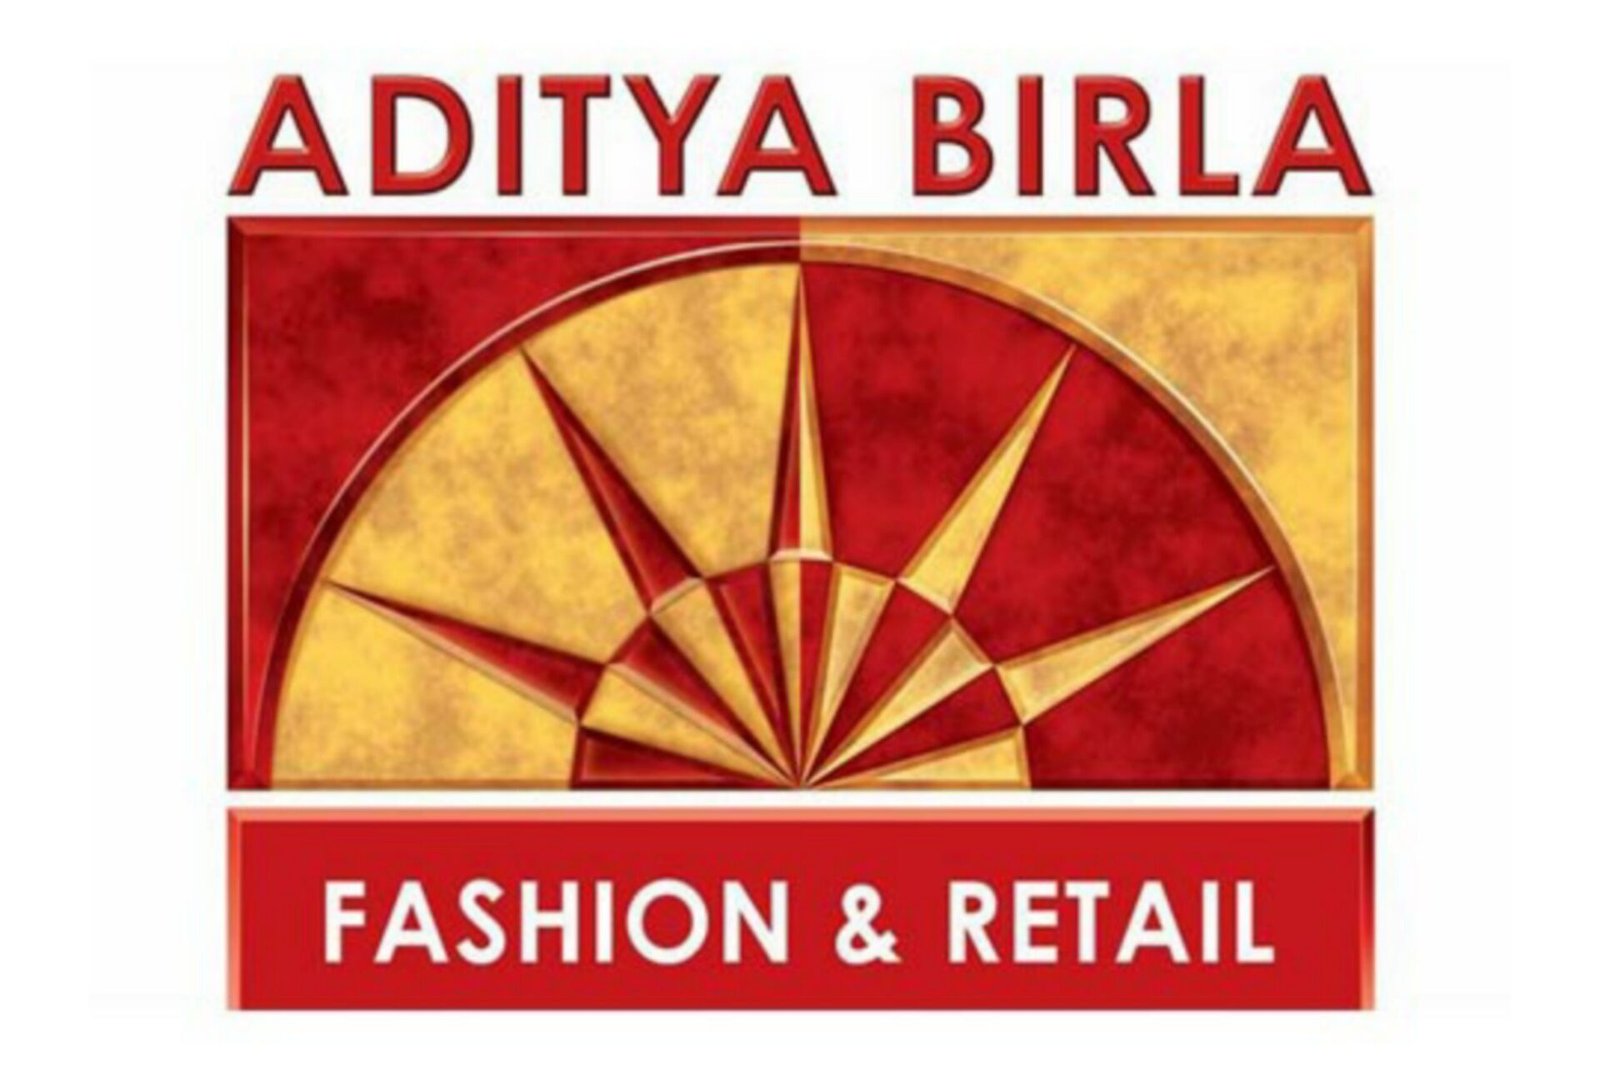 Aditya Birla Fashion Retail Limited